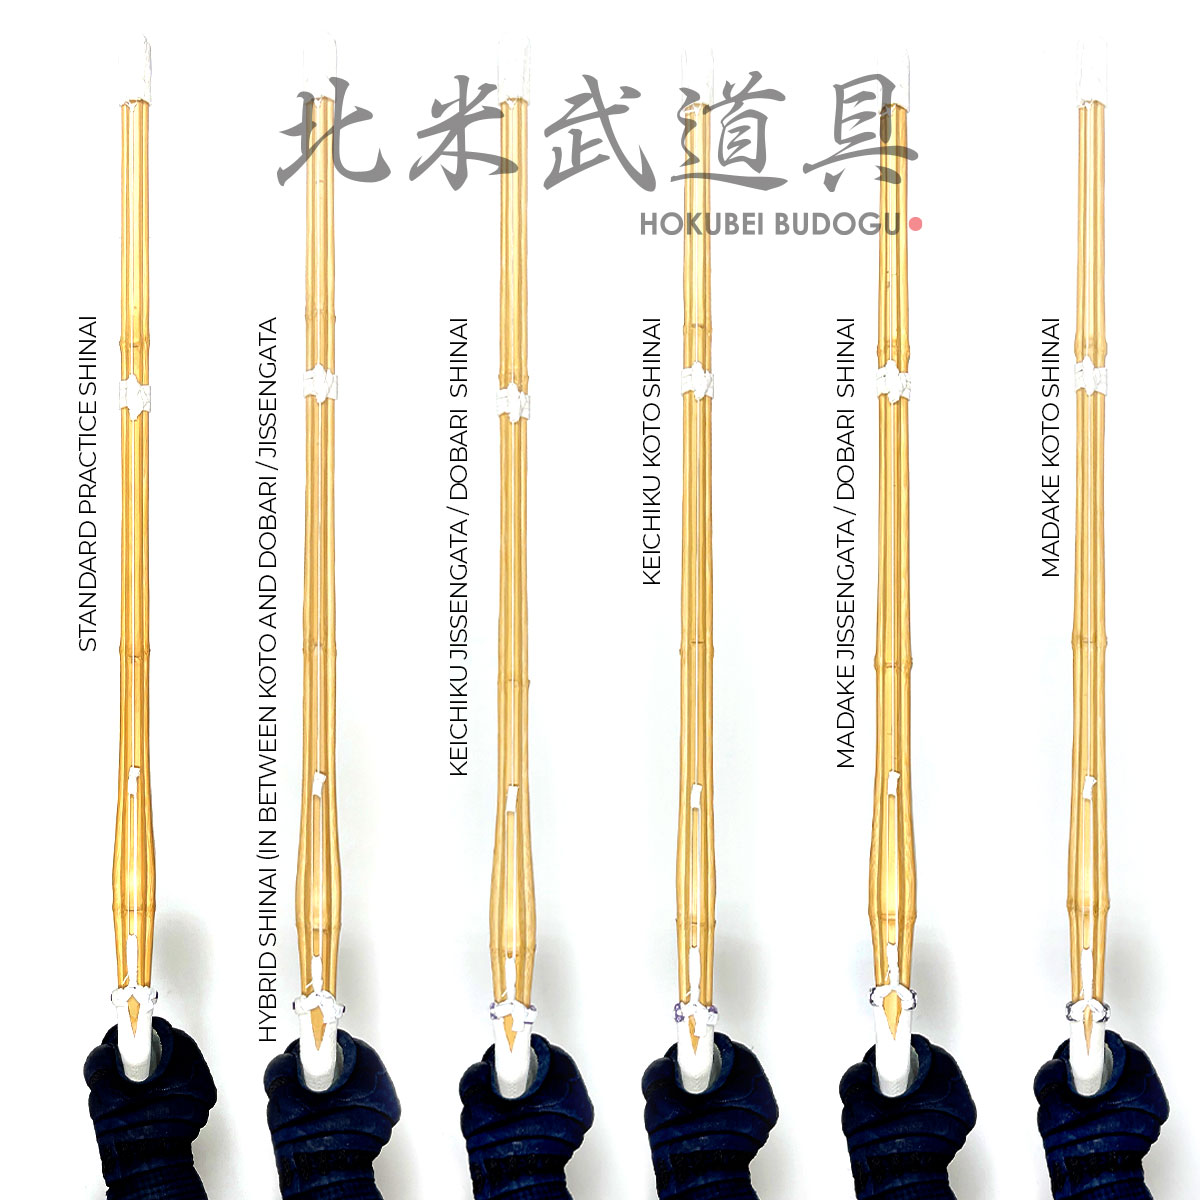 Hokubei Budogu shinai line up - different kinds of shinai made with keichiku or madake bamboo, in the styles of jissengata, dobari or koto